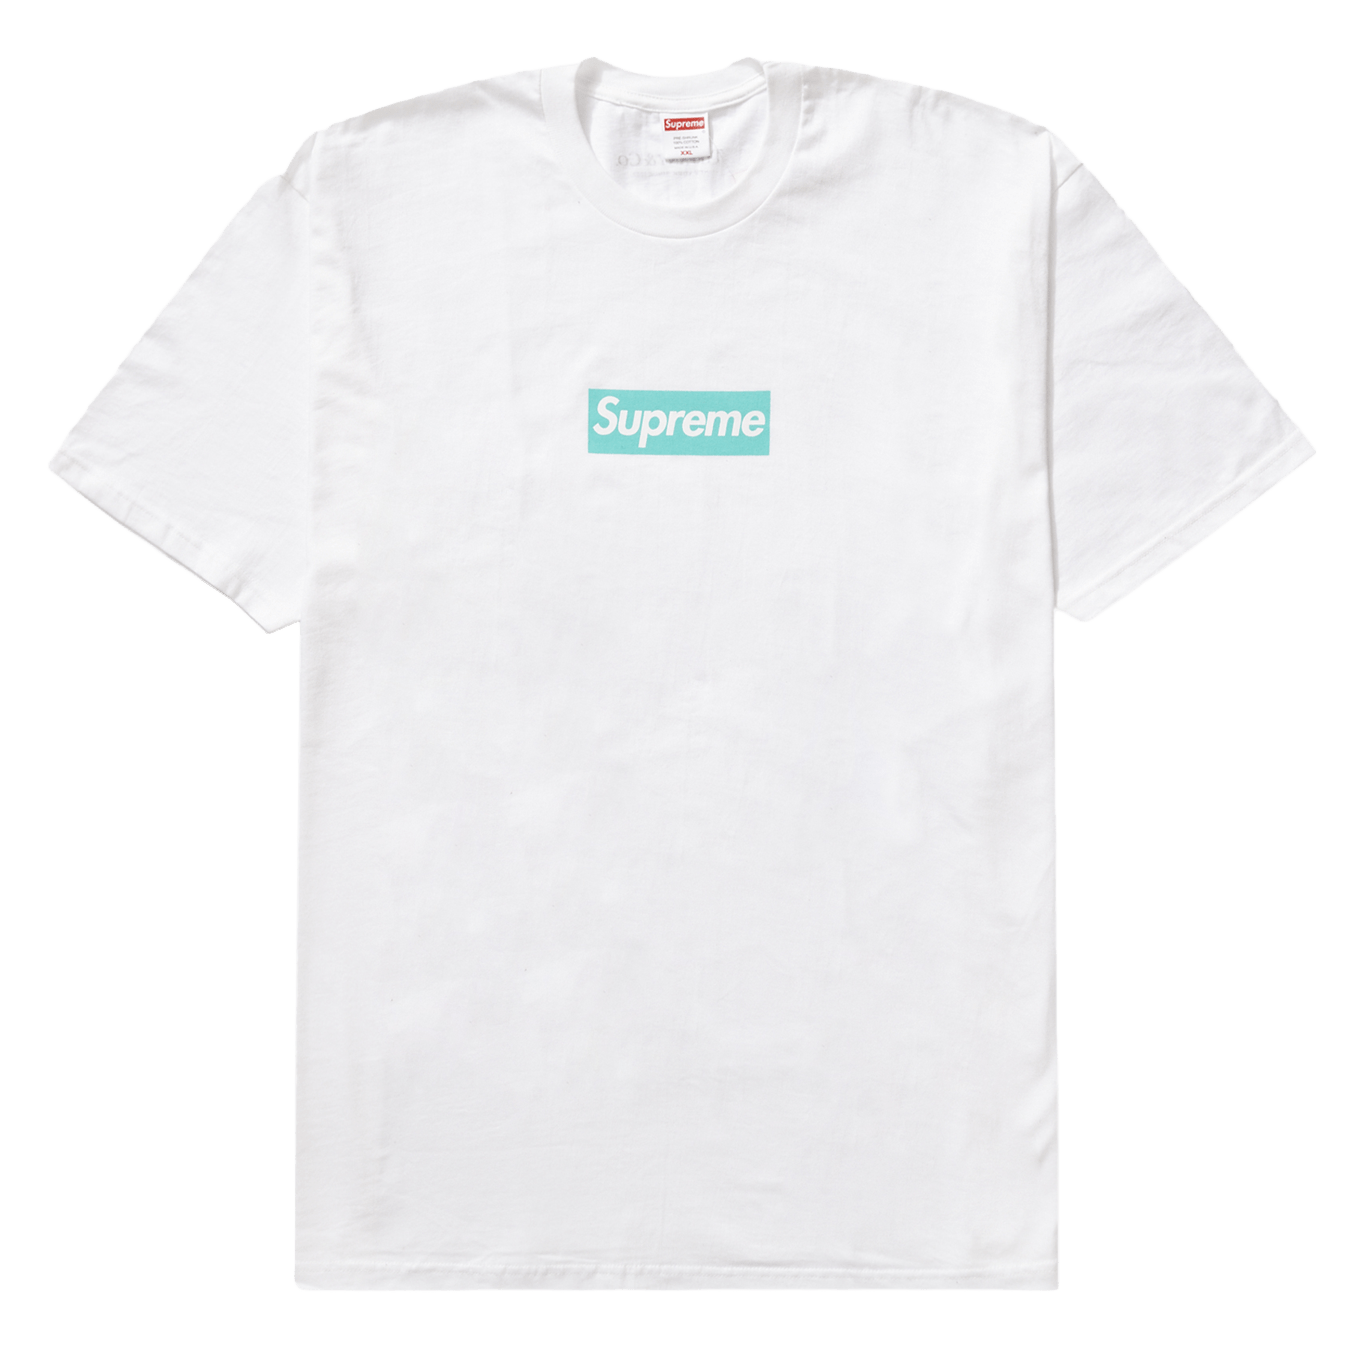 supreme t shirt graphic